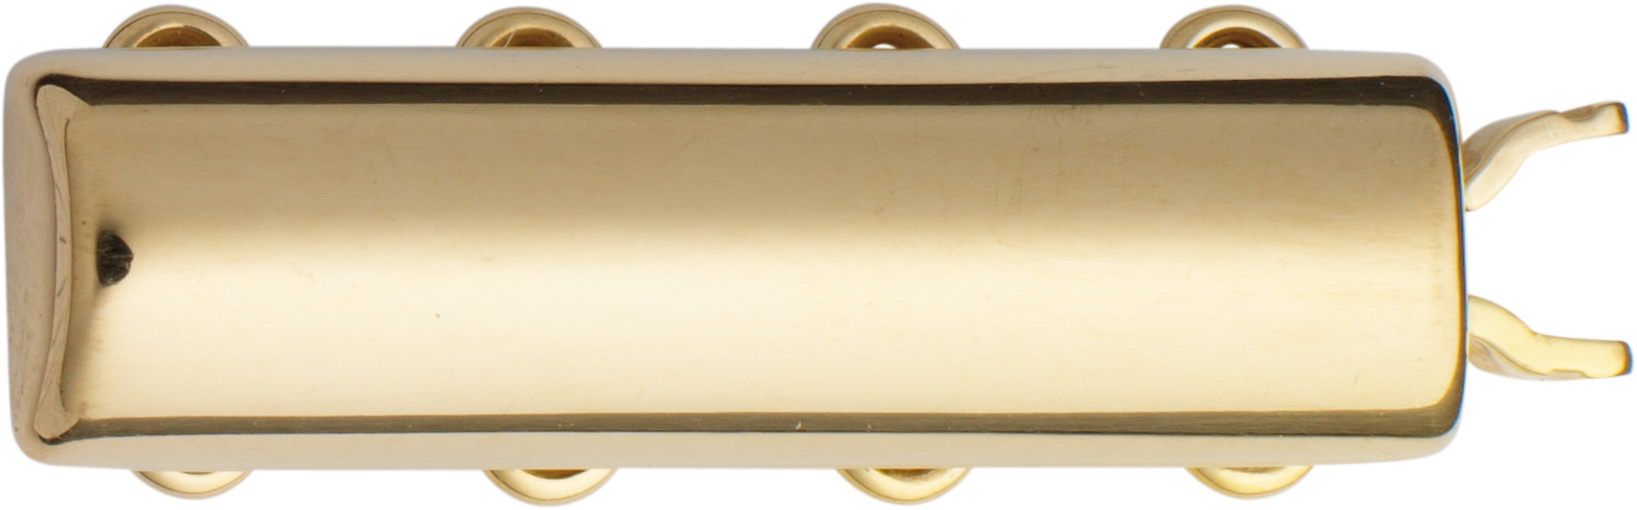 Clasp 4-row gold 585/-Gg, square, L 21.10 x W 6.00mm